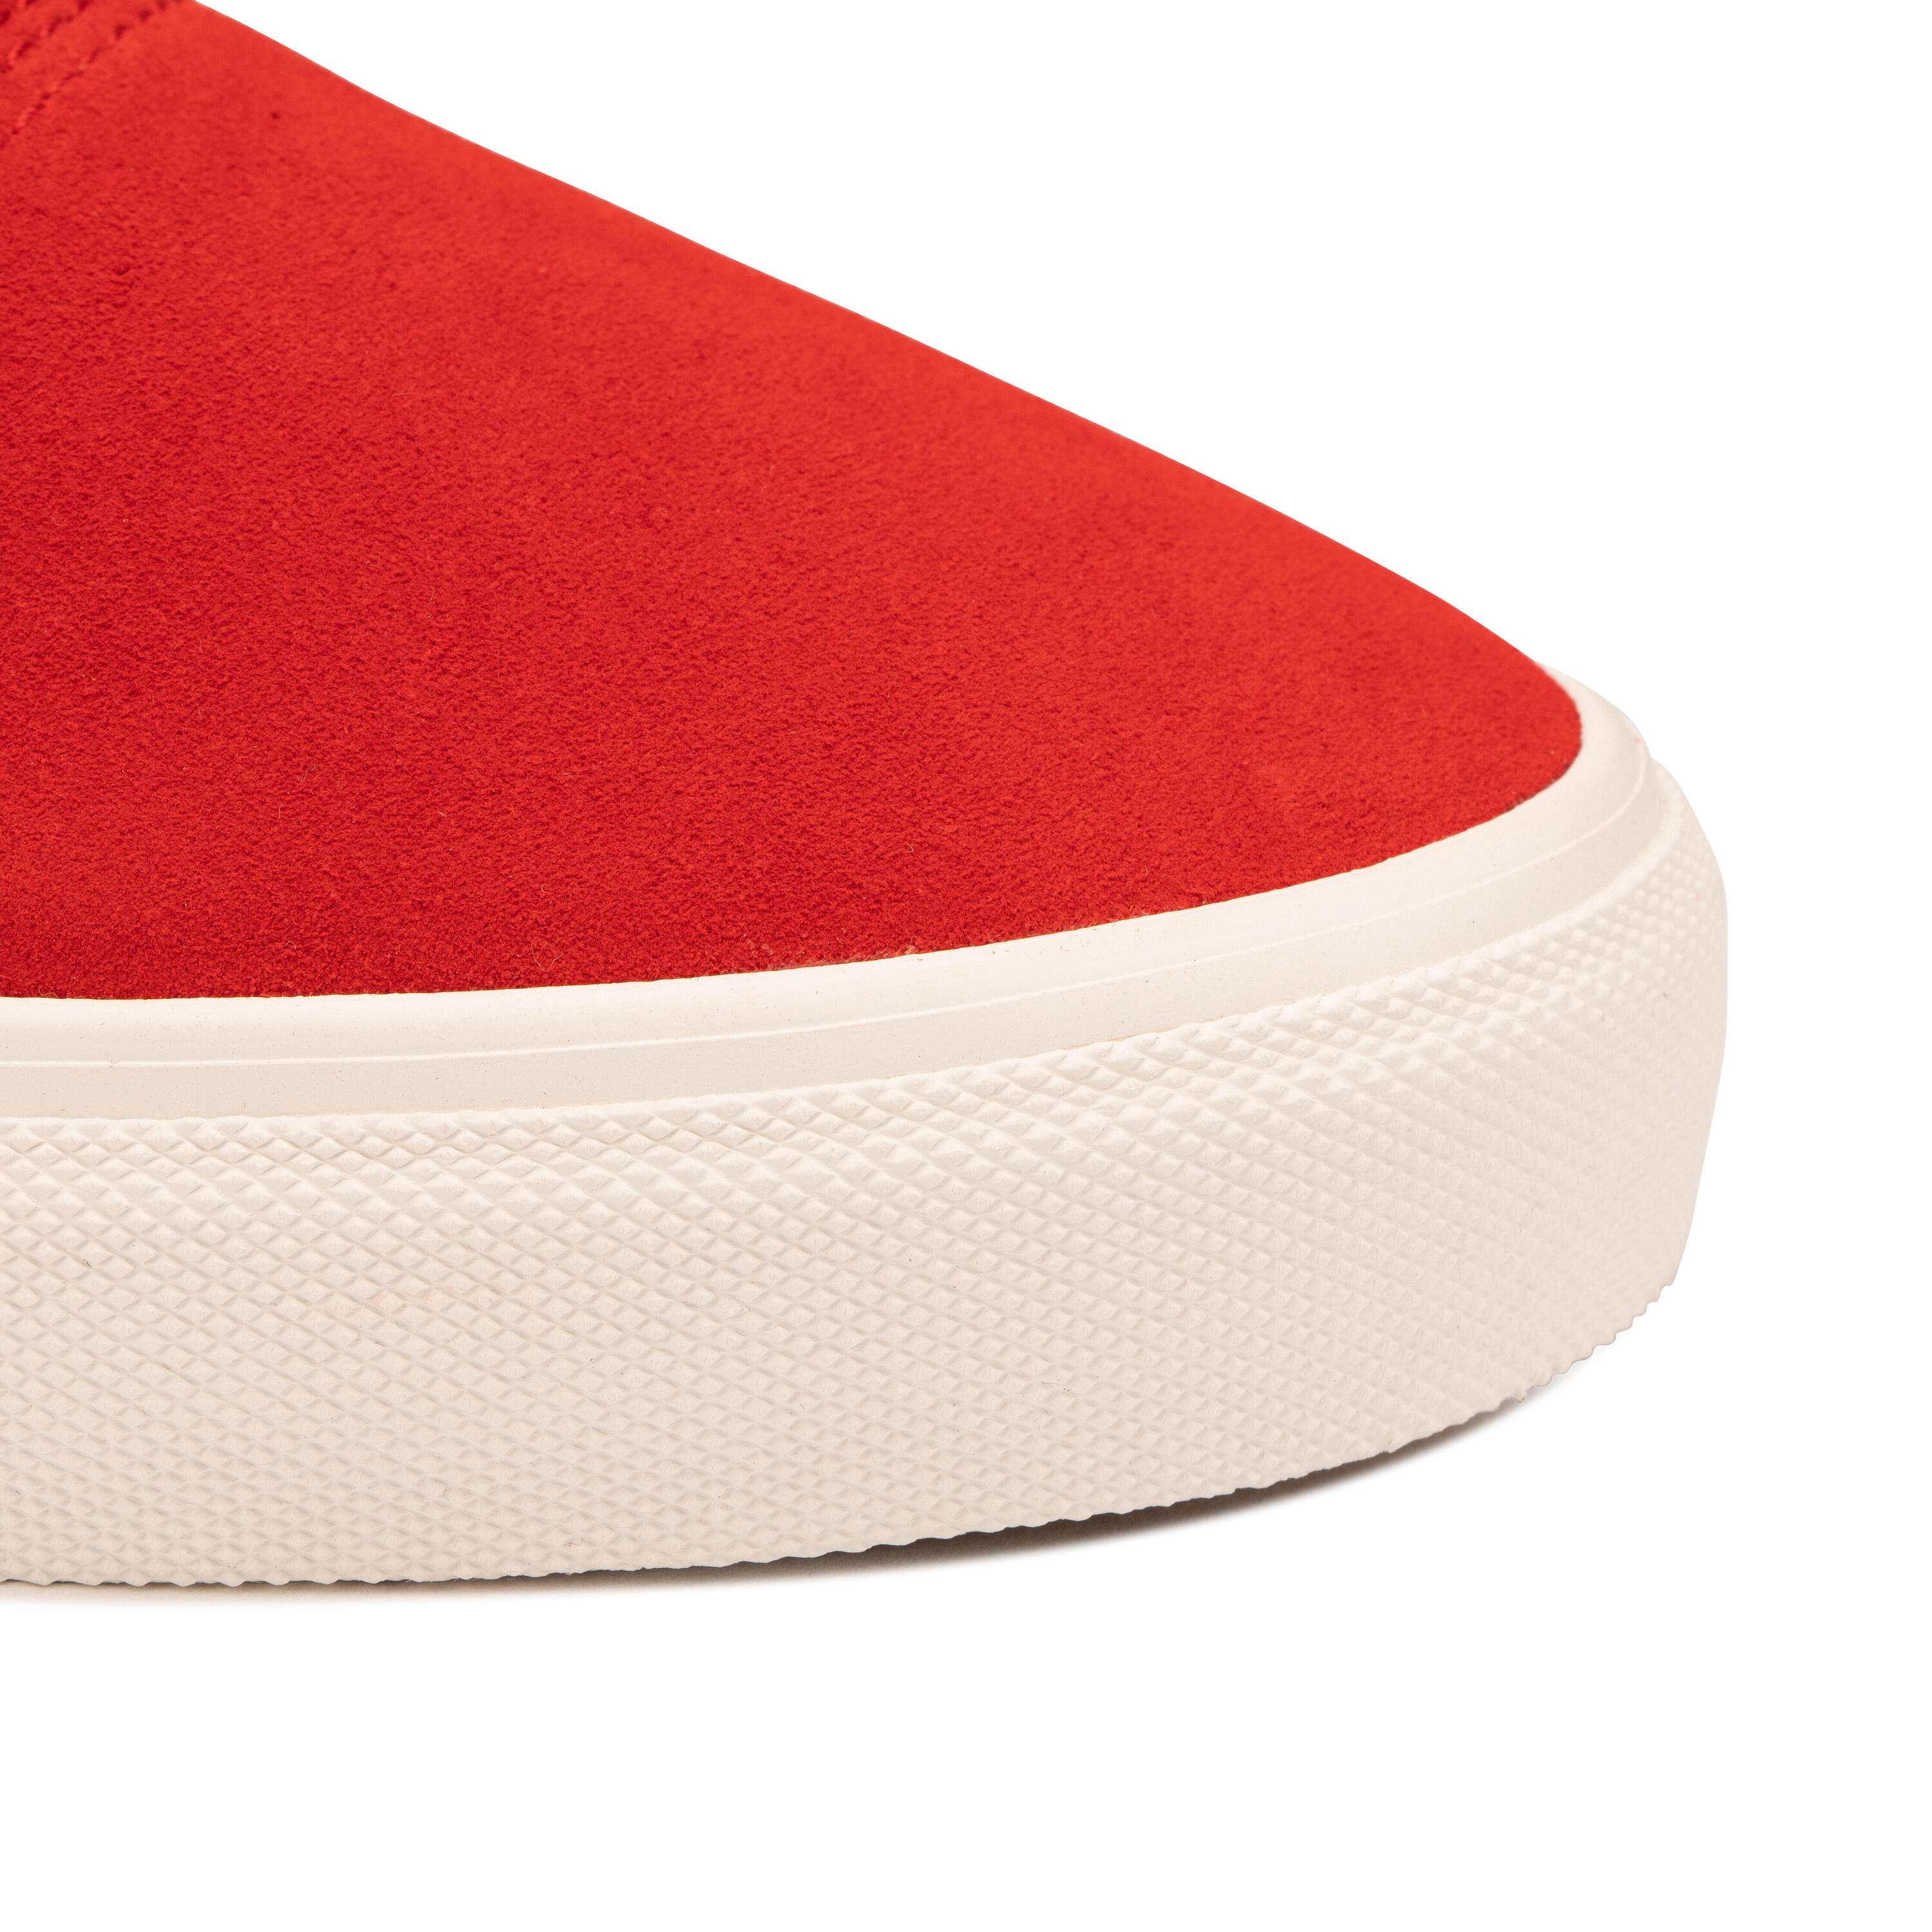 Adult Vulcanised Skate Shoes Vulca 500 II - Red/White 12/14